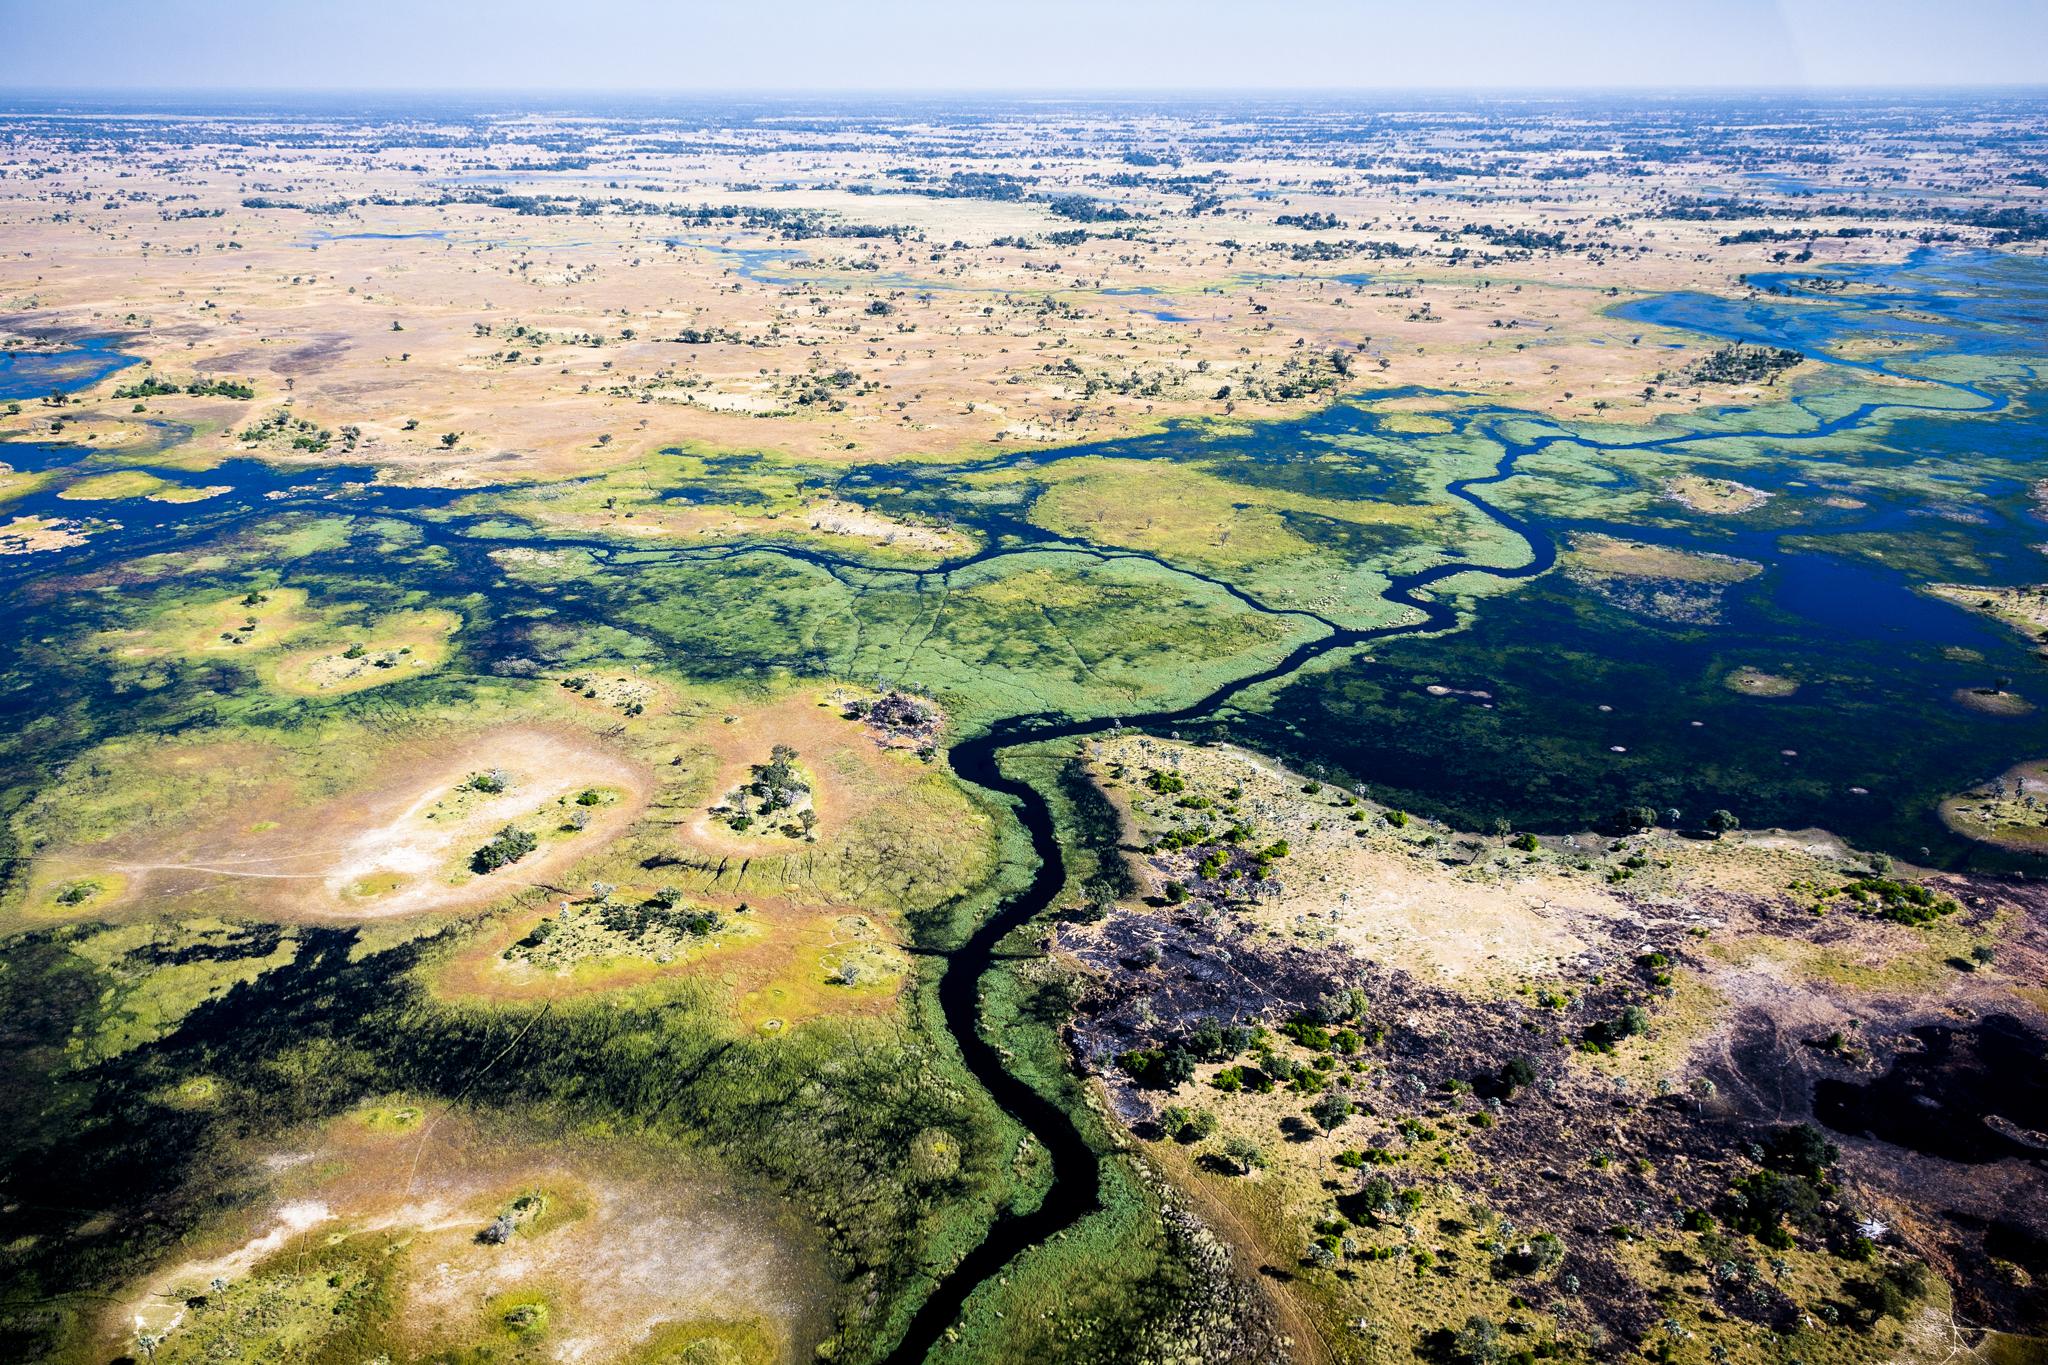 The Okovango Delta